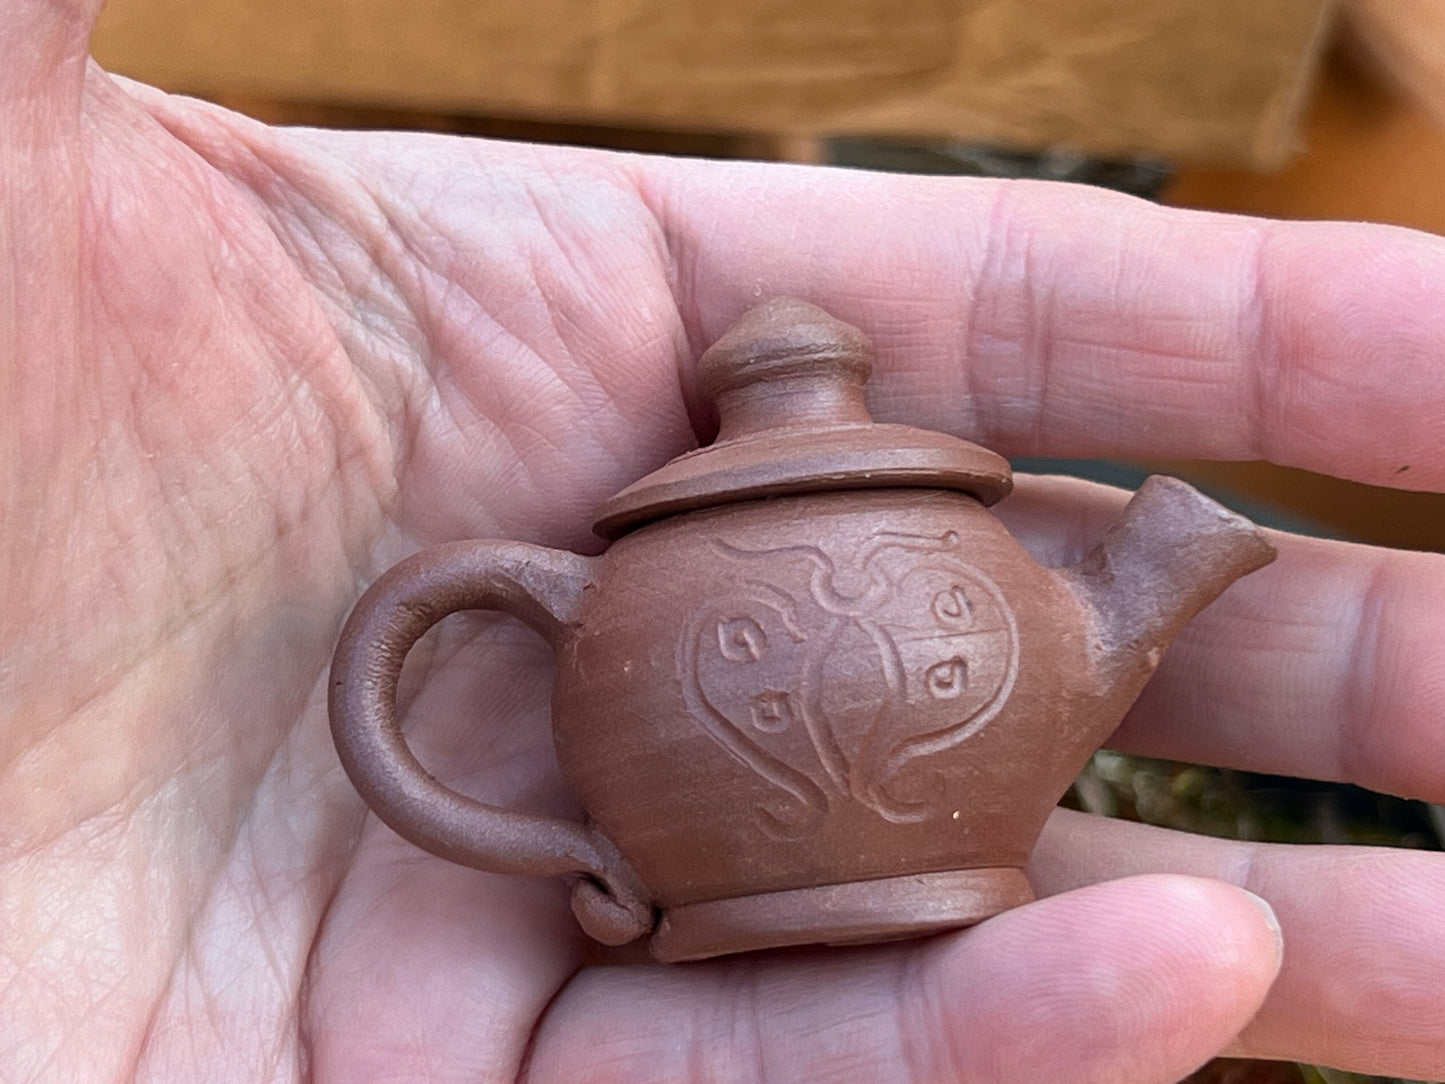 Miniature Teapot 4